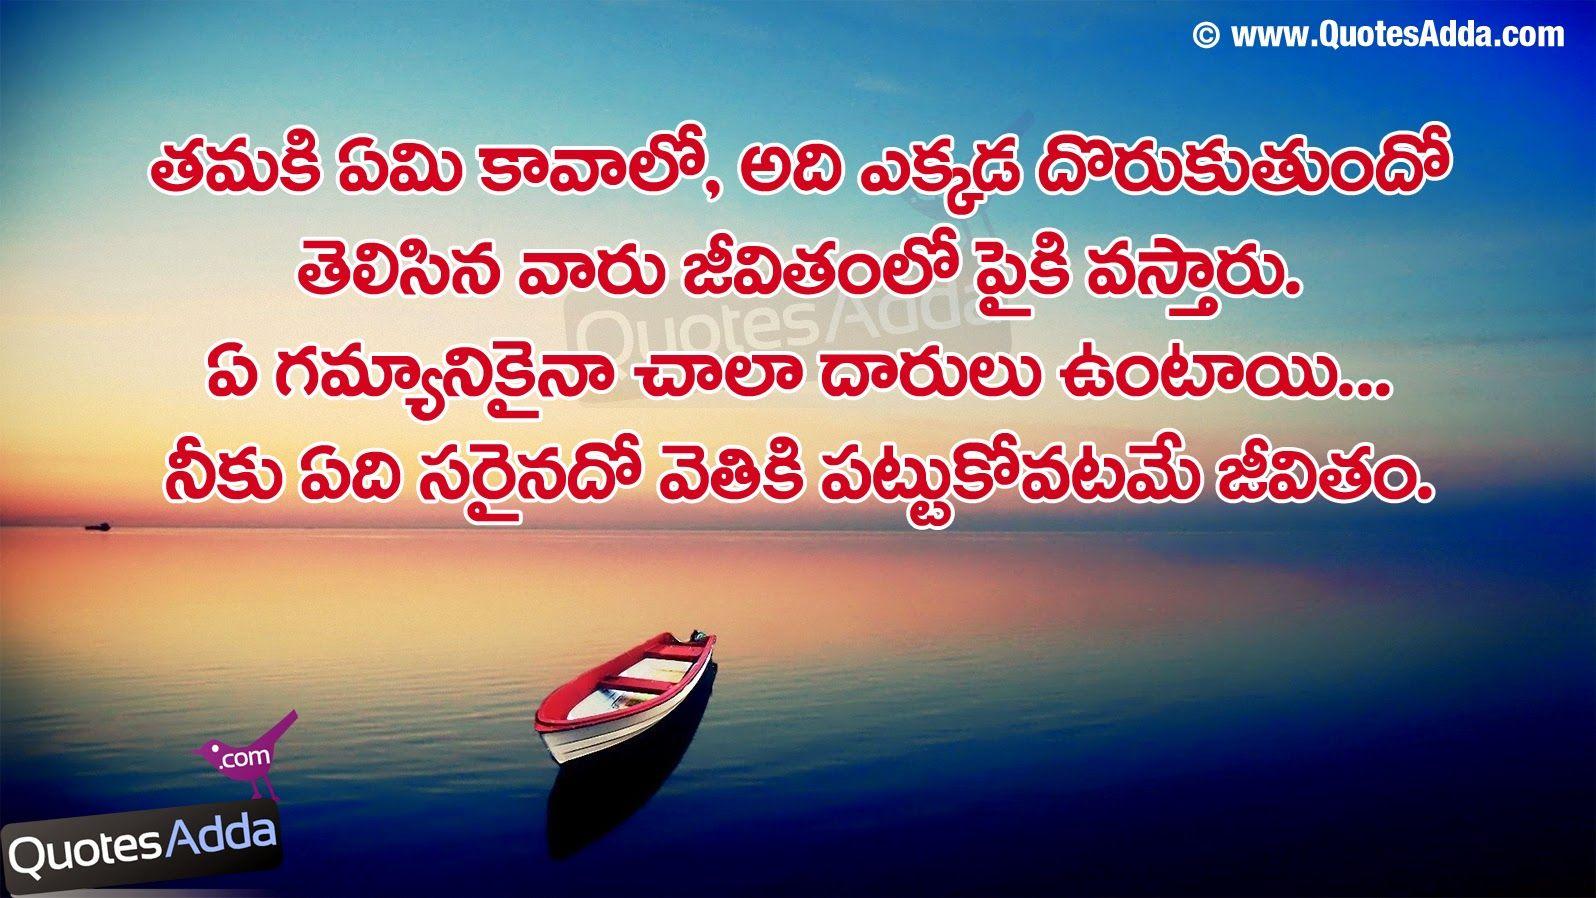 Latest New Telugu Life Quotations Wallpaper.com